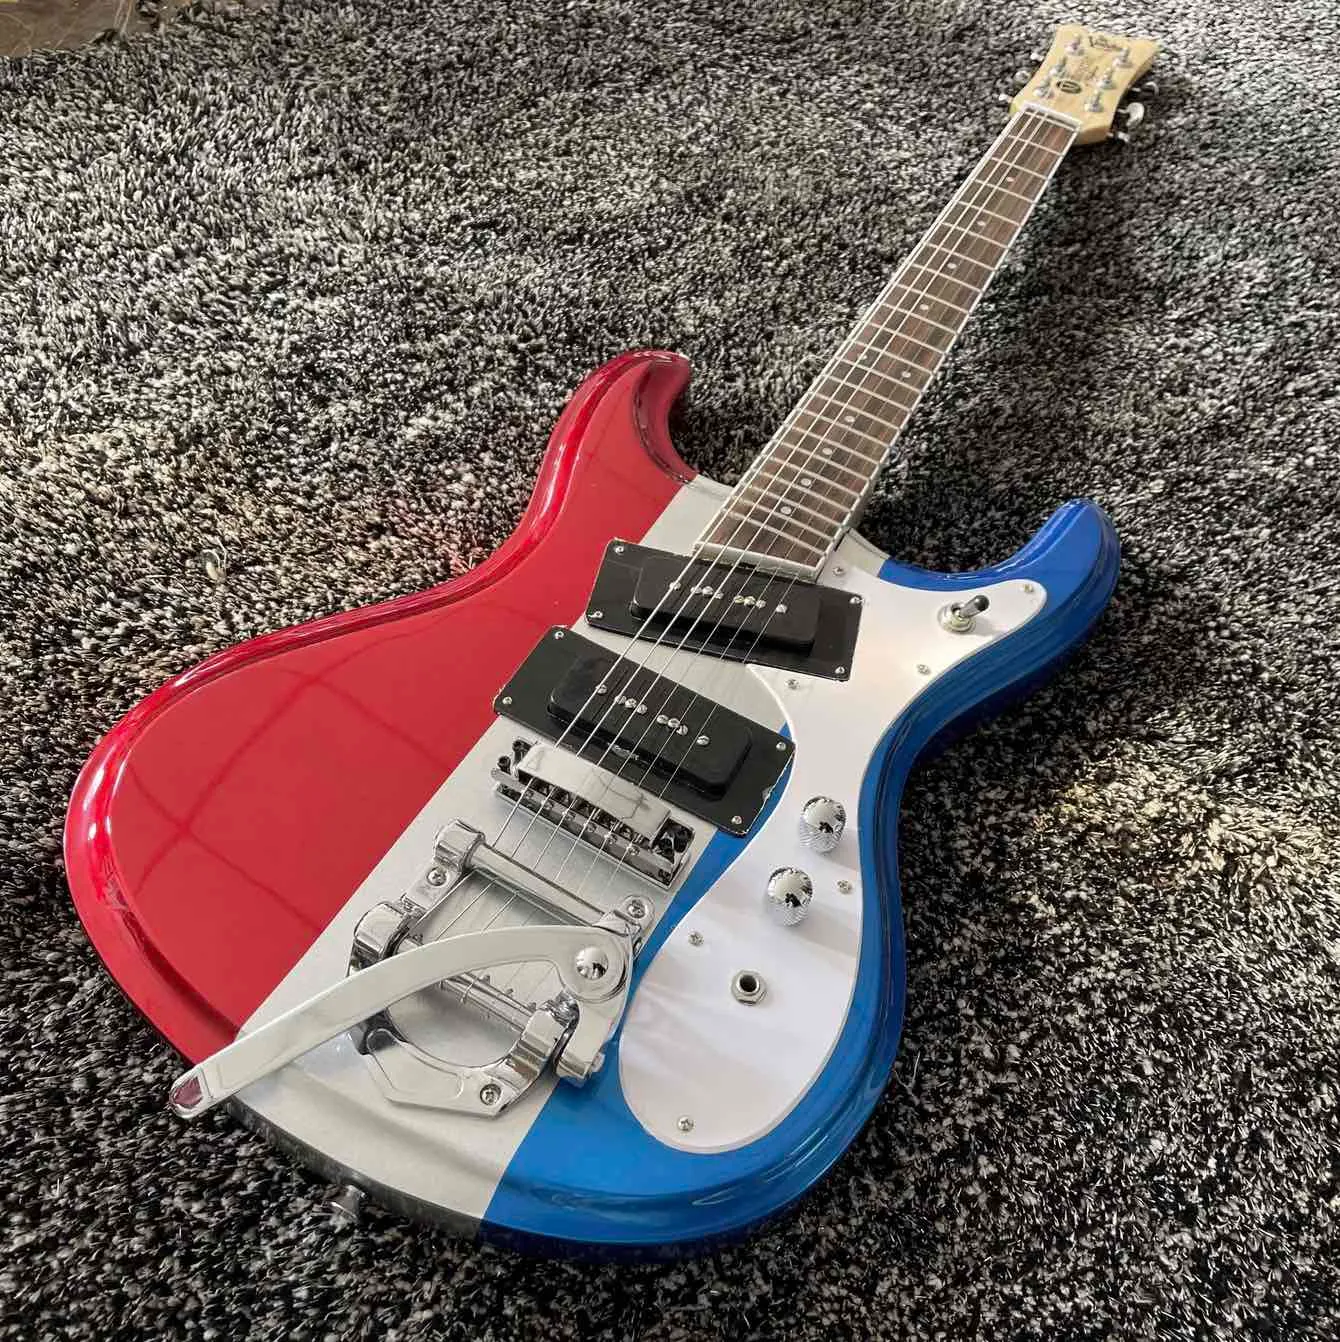 Custom Mosrite Electric Guitar Johnny Ramone Venture Red White Blue Color with Bigs Tremolo Bridge Dark Aqua White Pickguard Black P-90 Pickups